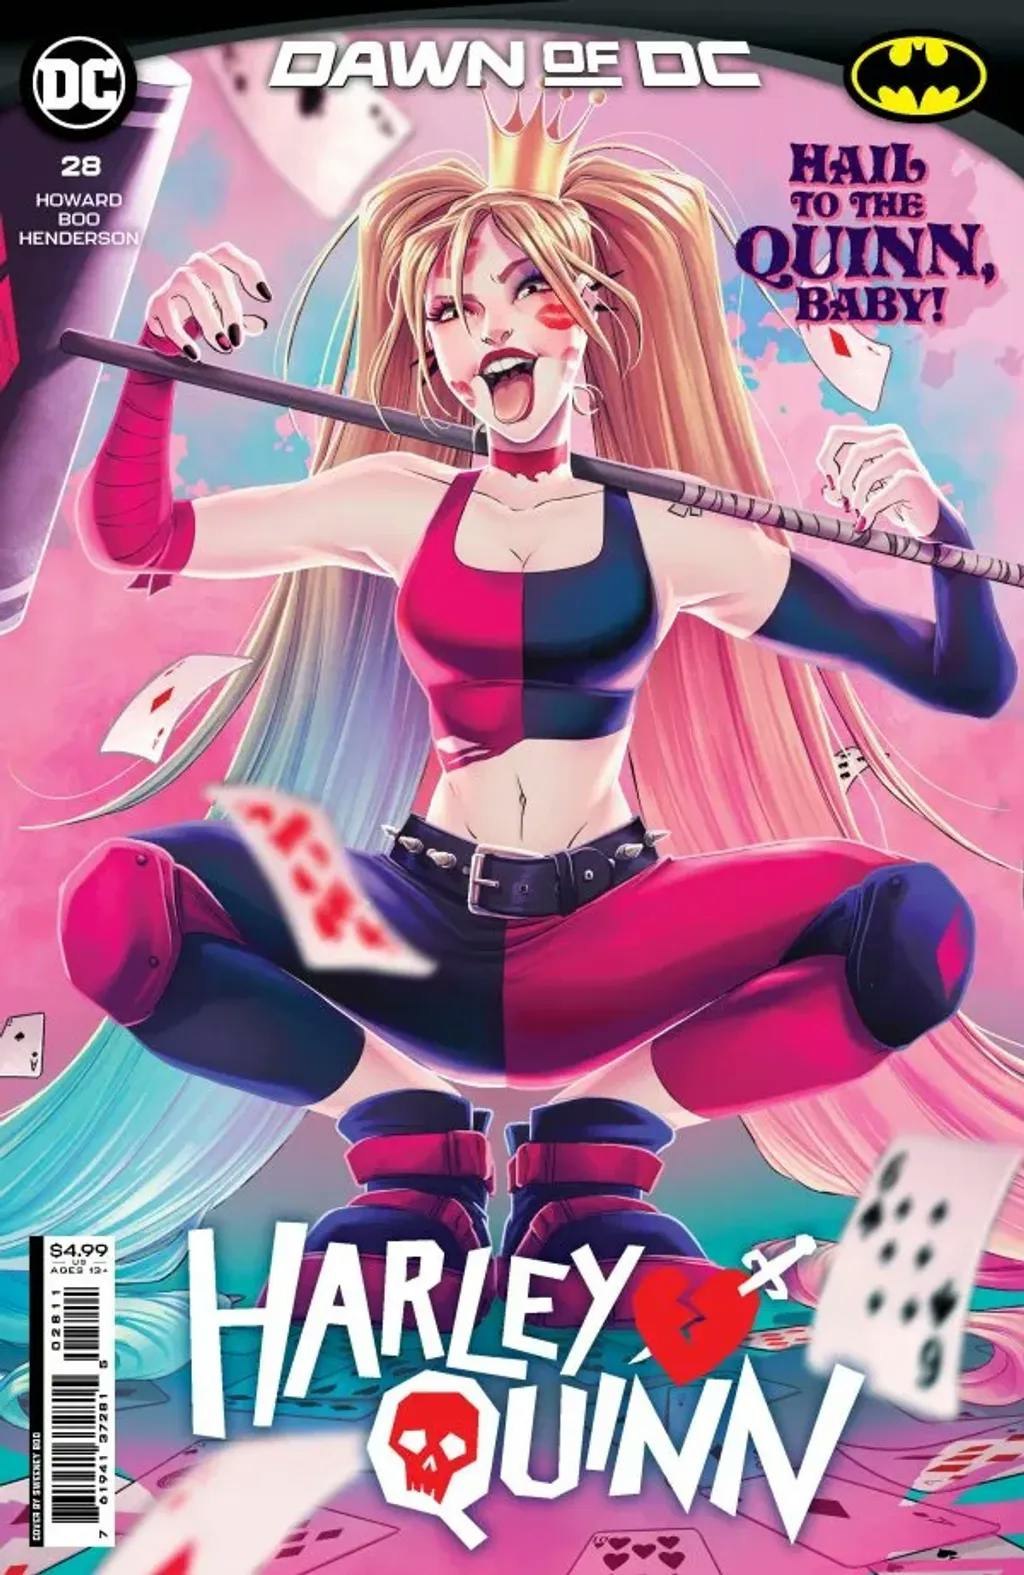 Harley Quinn #28 by Tini Howard, Erica Henderson, and Sweeney Boo